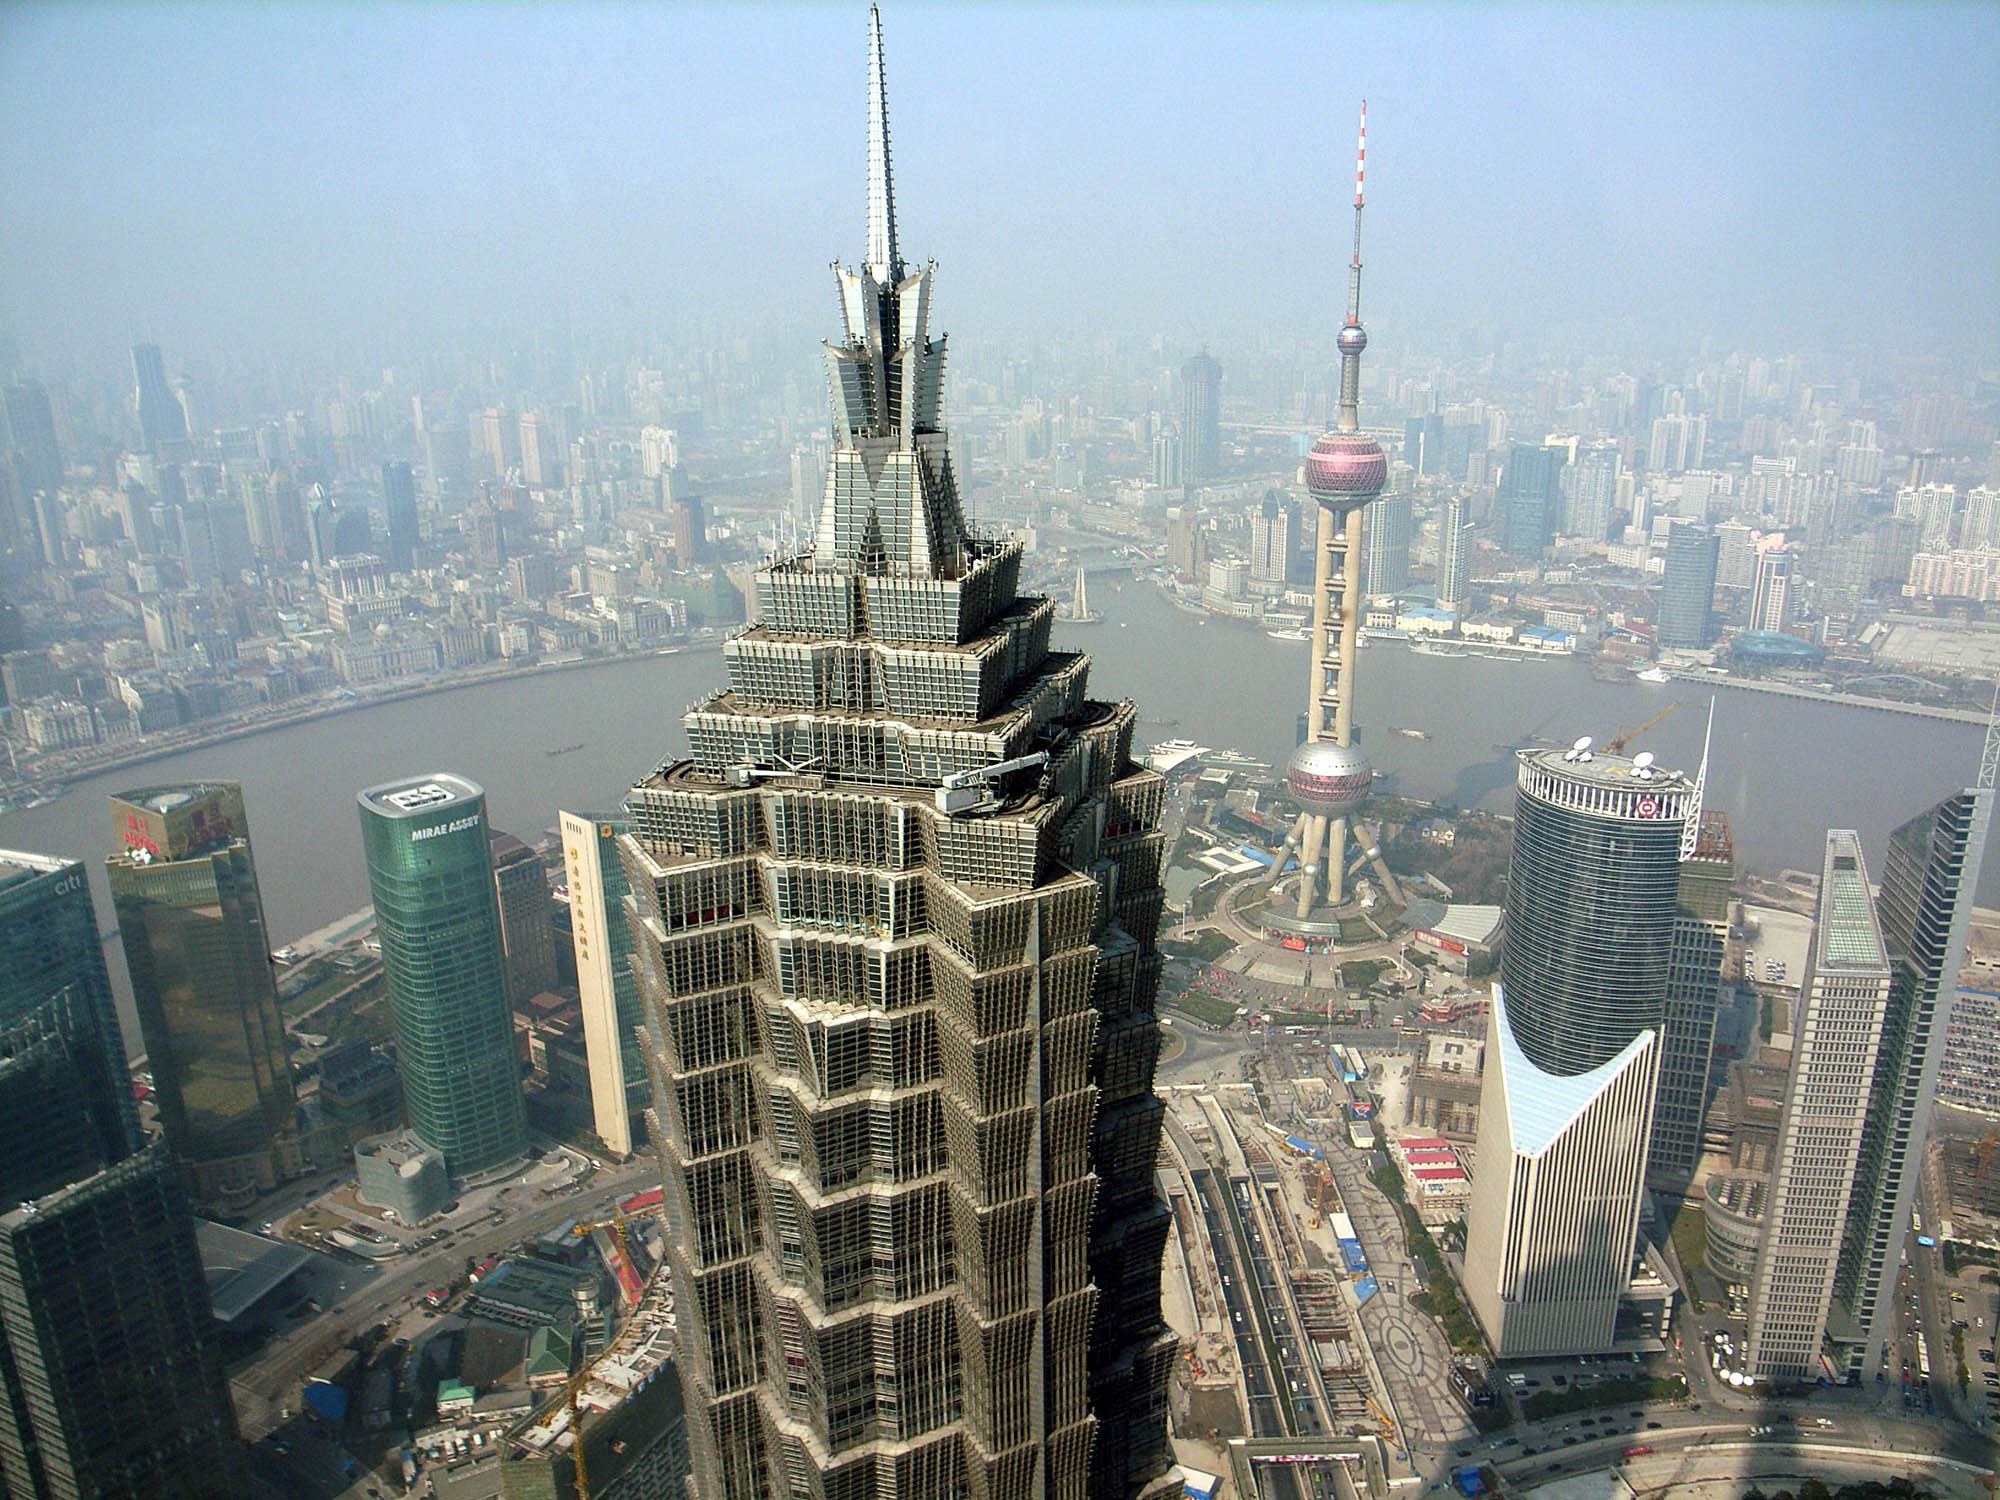 Jin Mao Tower in Shanghai, China